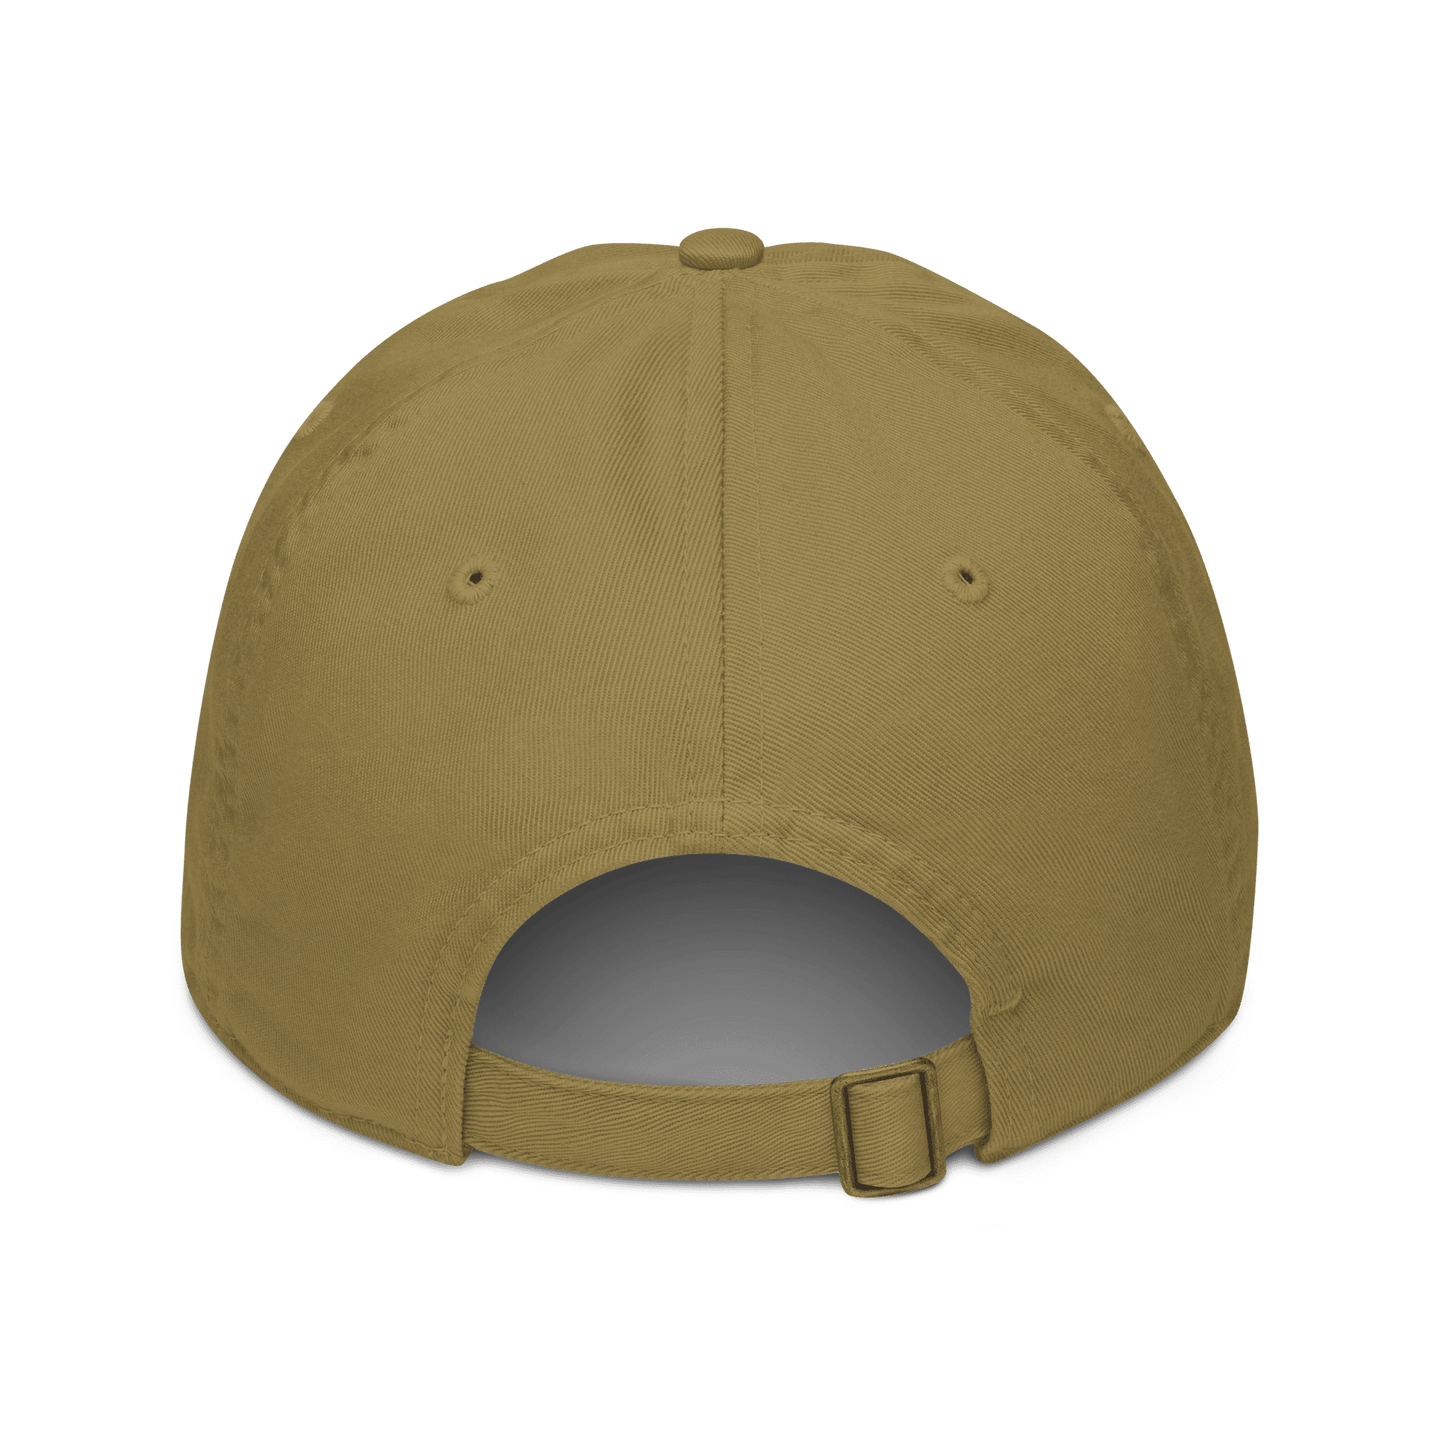 Pittsburgh Est 1758 Embroidered Baseball Hat Yinzergear 